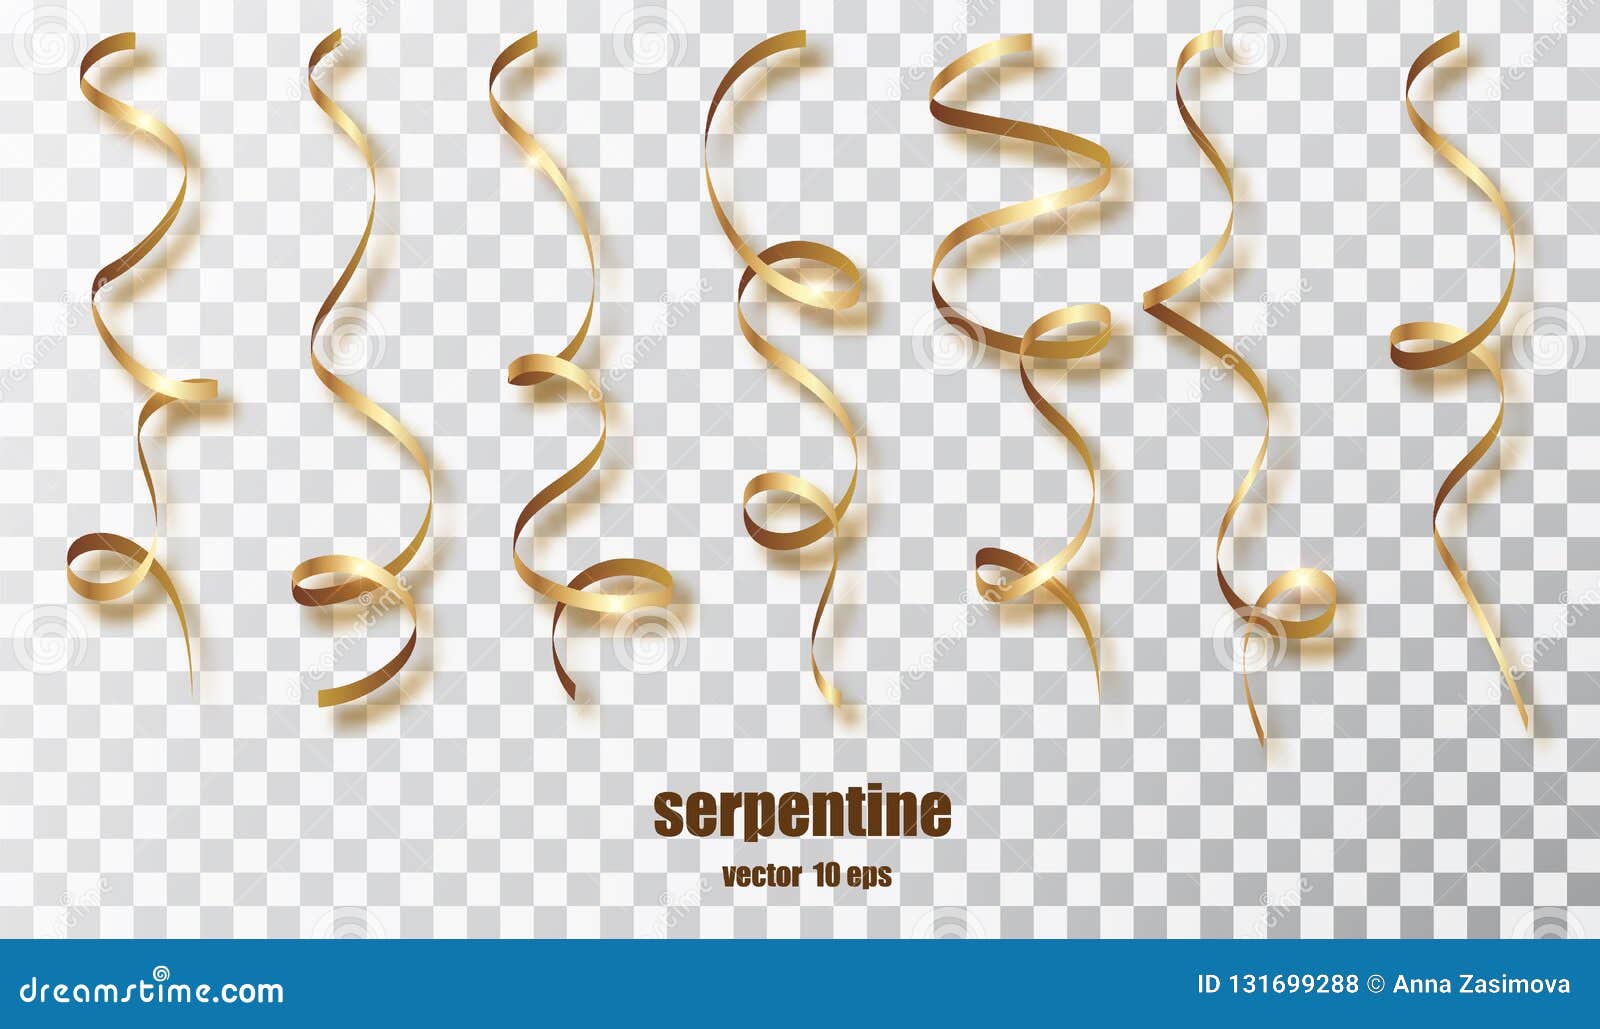 Gold Streamers Golden Serpentine Confetti Ribbon Stock Vector (Royalty  Free) 551385265